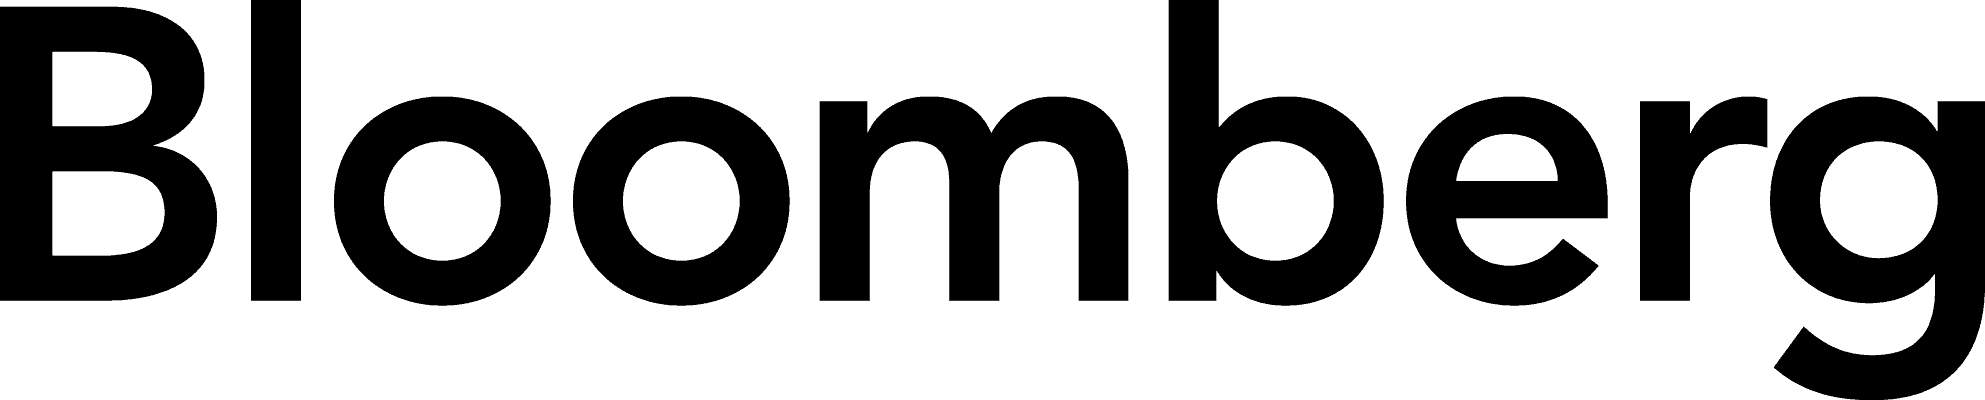 Bloomberg Logo PNG Image